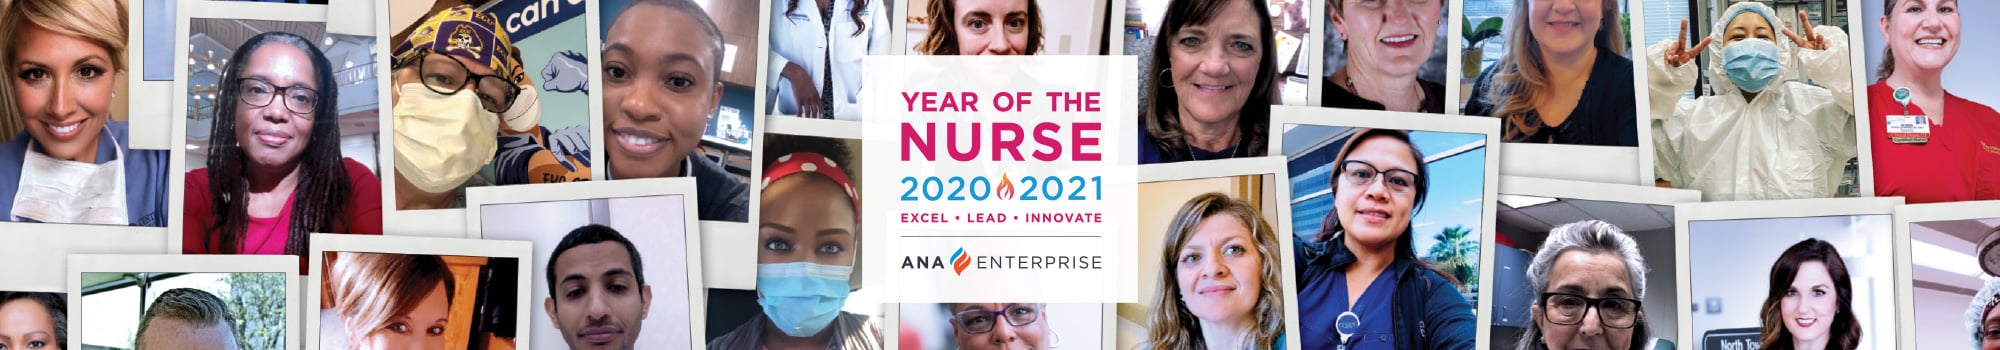 Virtual-Summit-Year-of-Nurse-2021-Band-Art